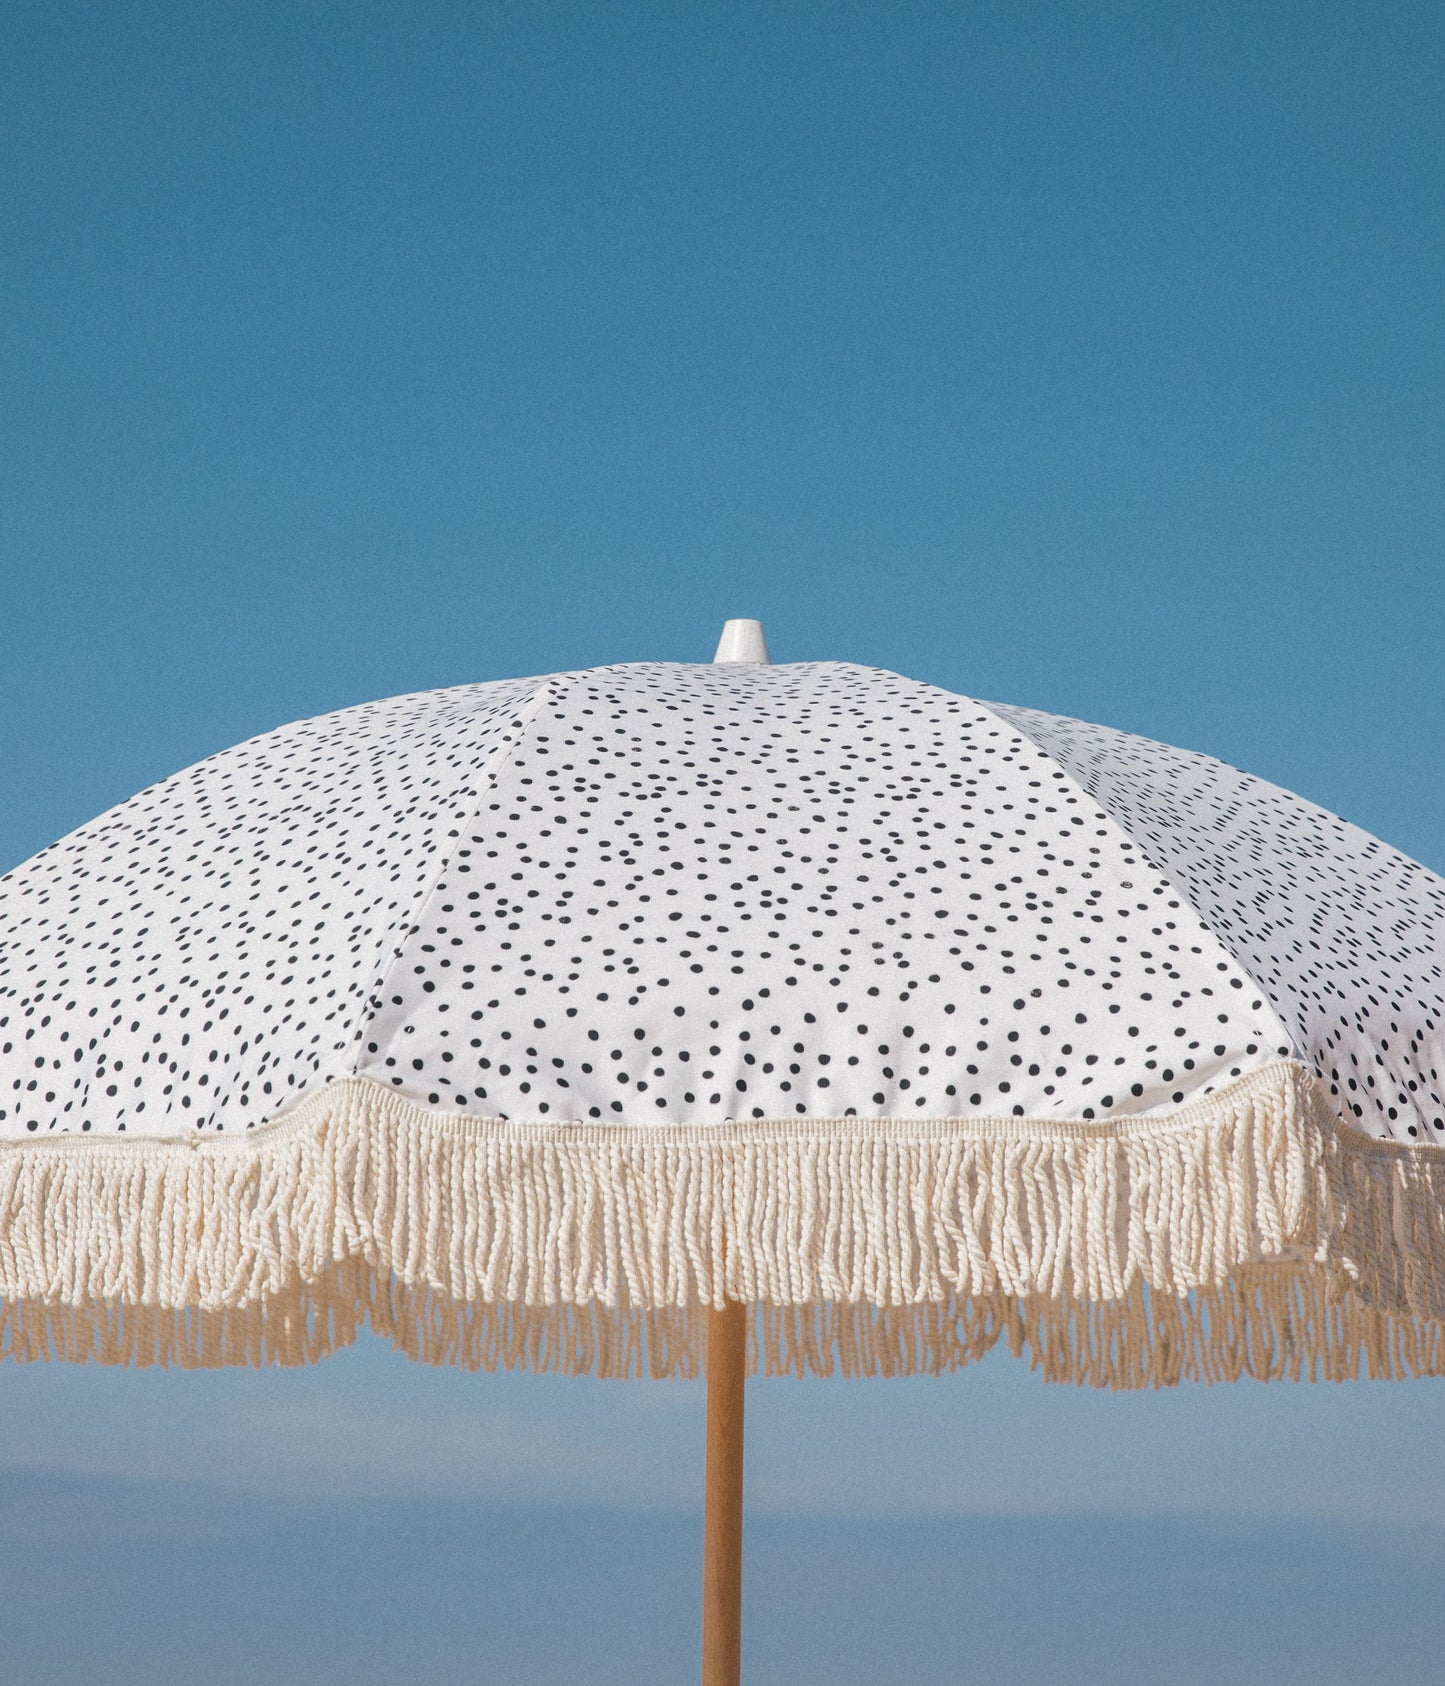 Salt Beach Umbrella